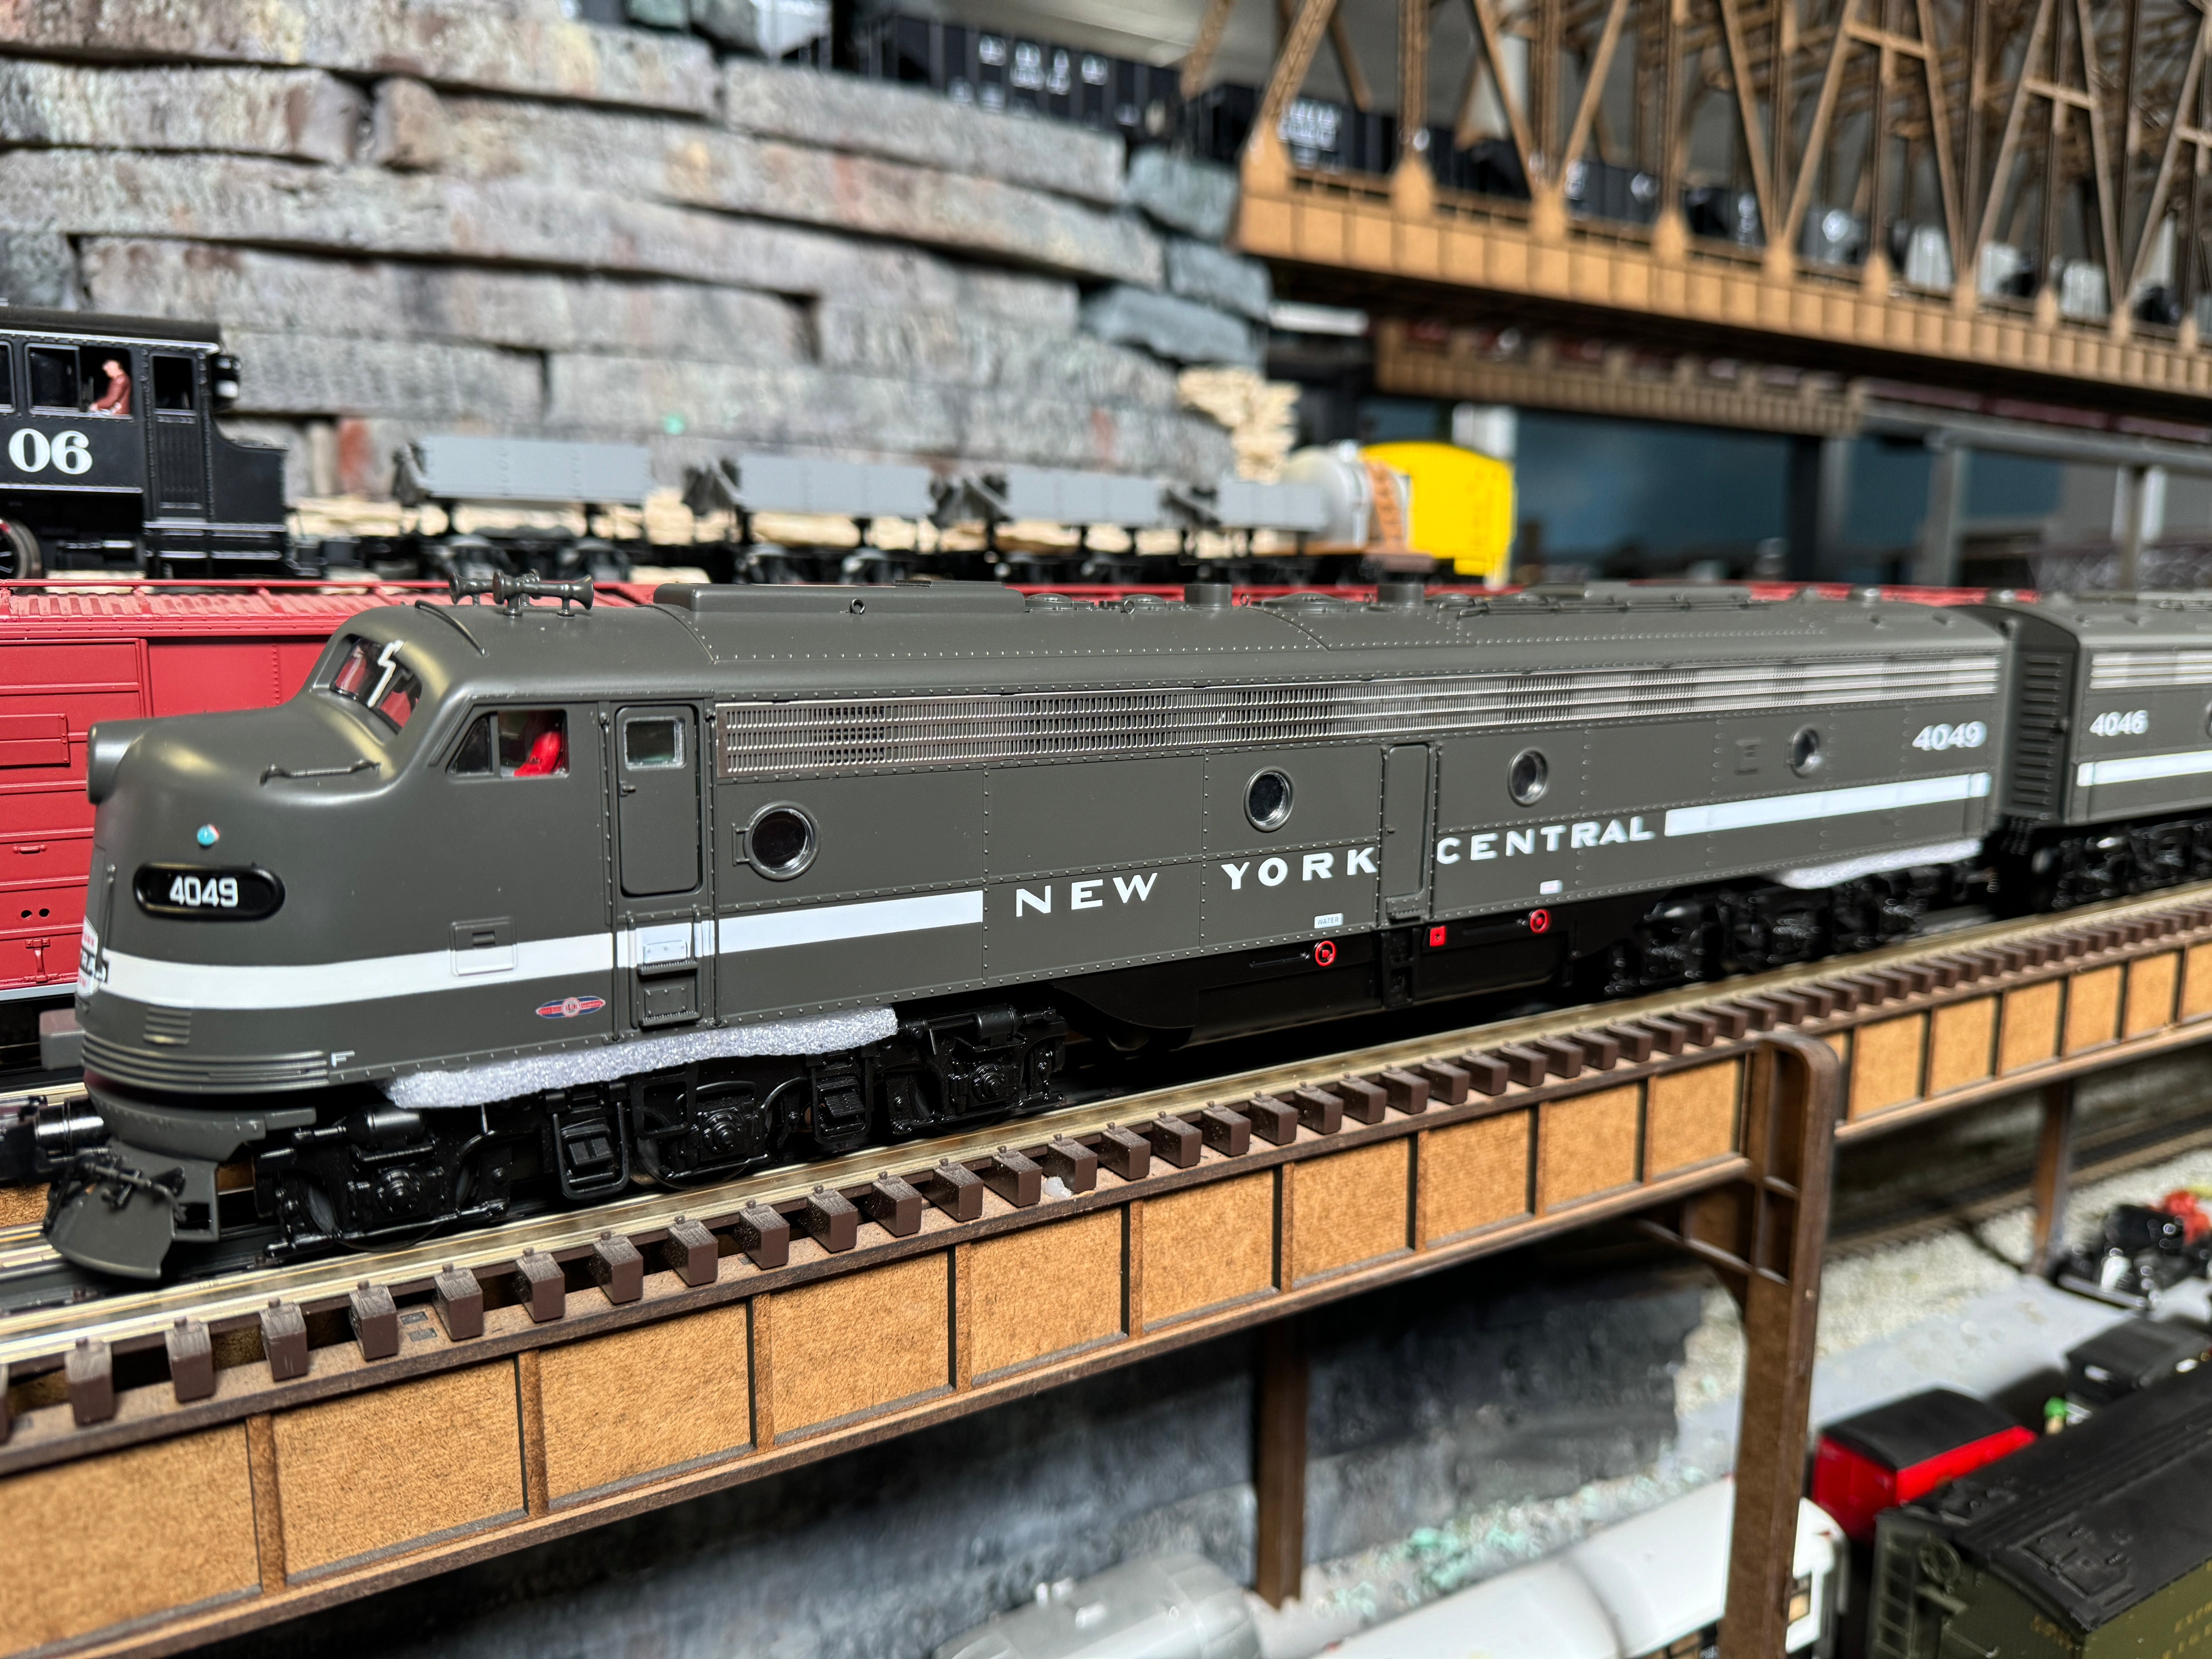 Atlas O 30138251S - Premier - E8 Diesel Locomotive "New York Central" #4049 w/ PS3 (Powered) - Custom Run for MrMuffin'sTrains